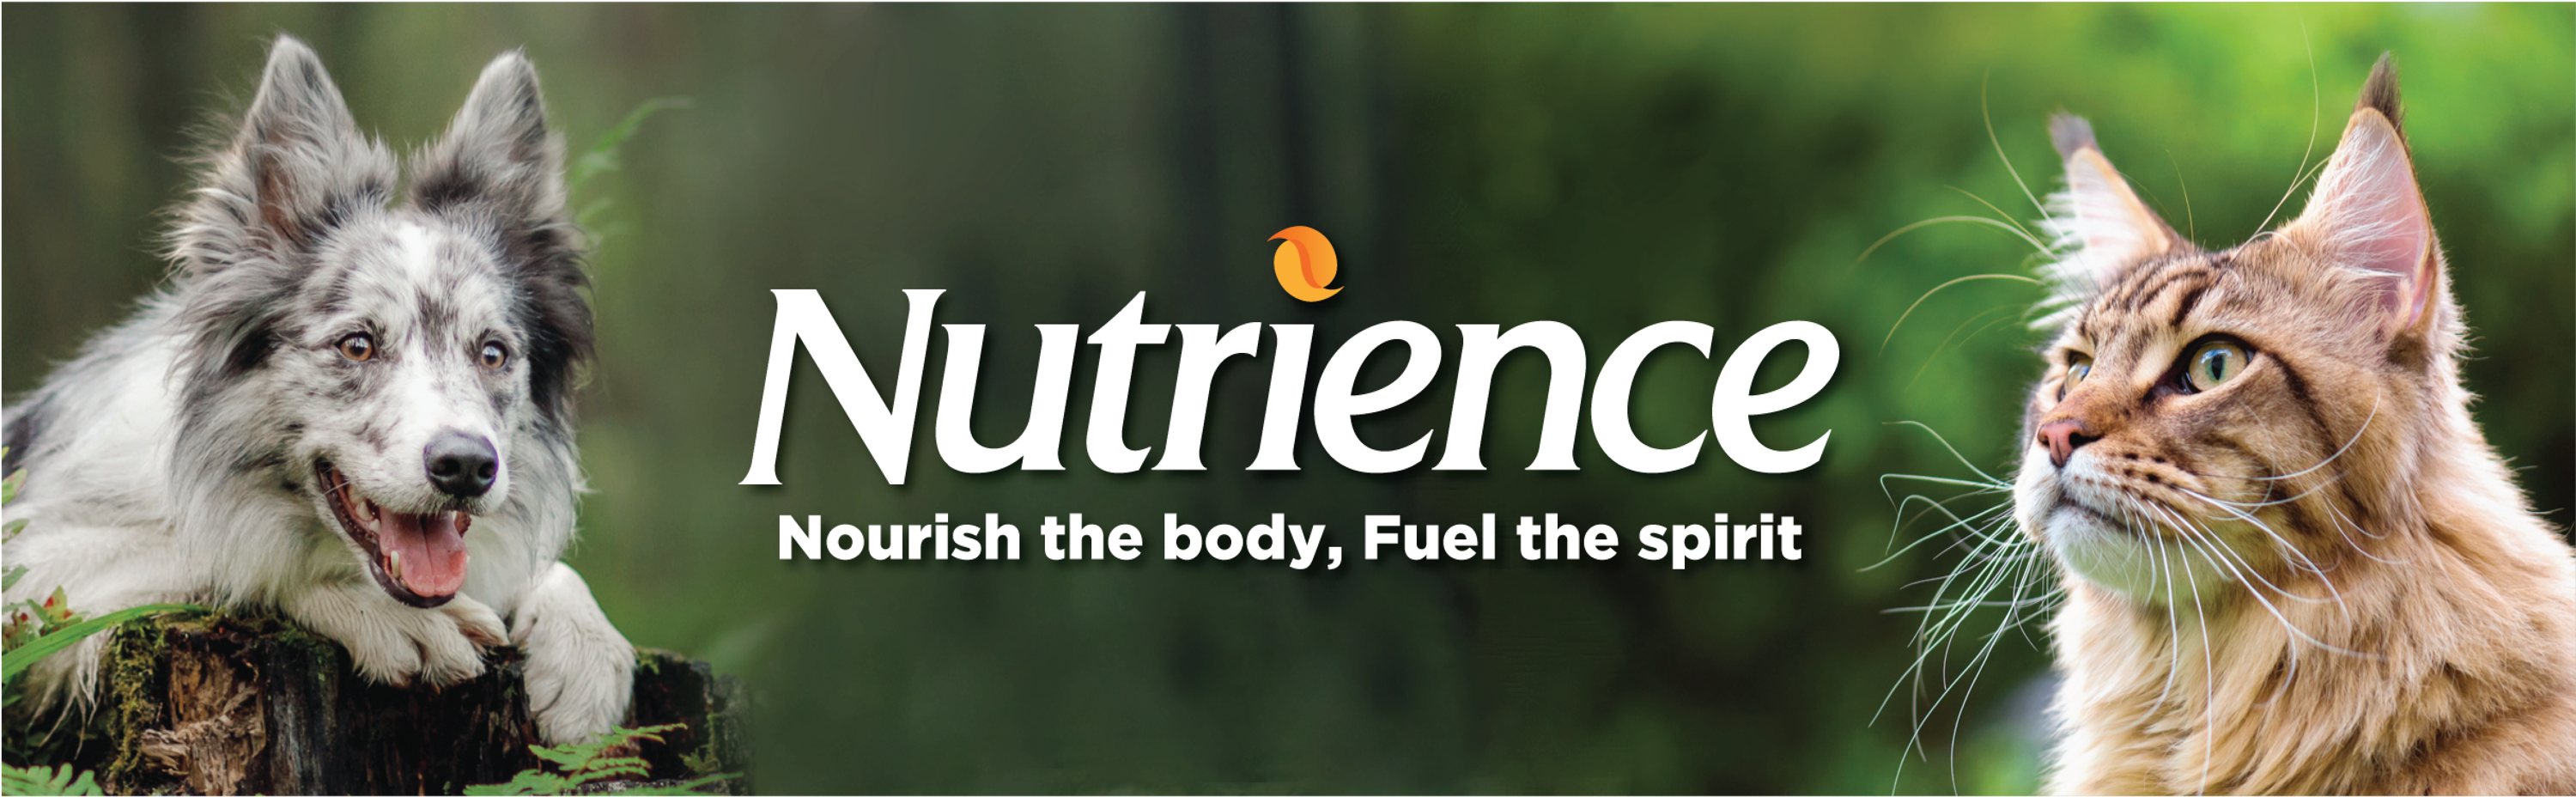 NUTRIENCE - Nourish the body, fuel the spirit